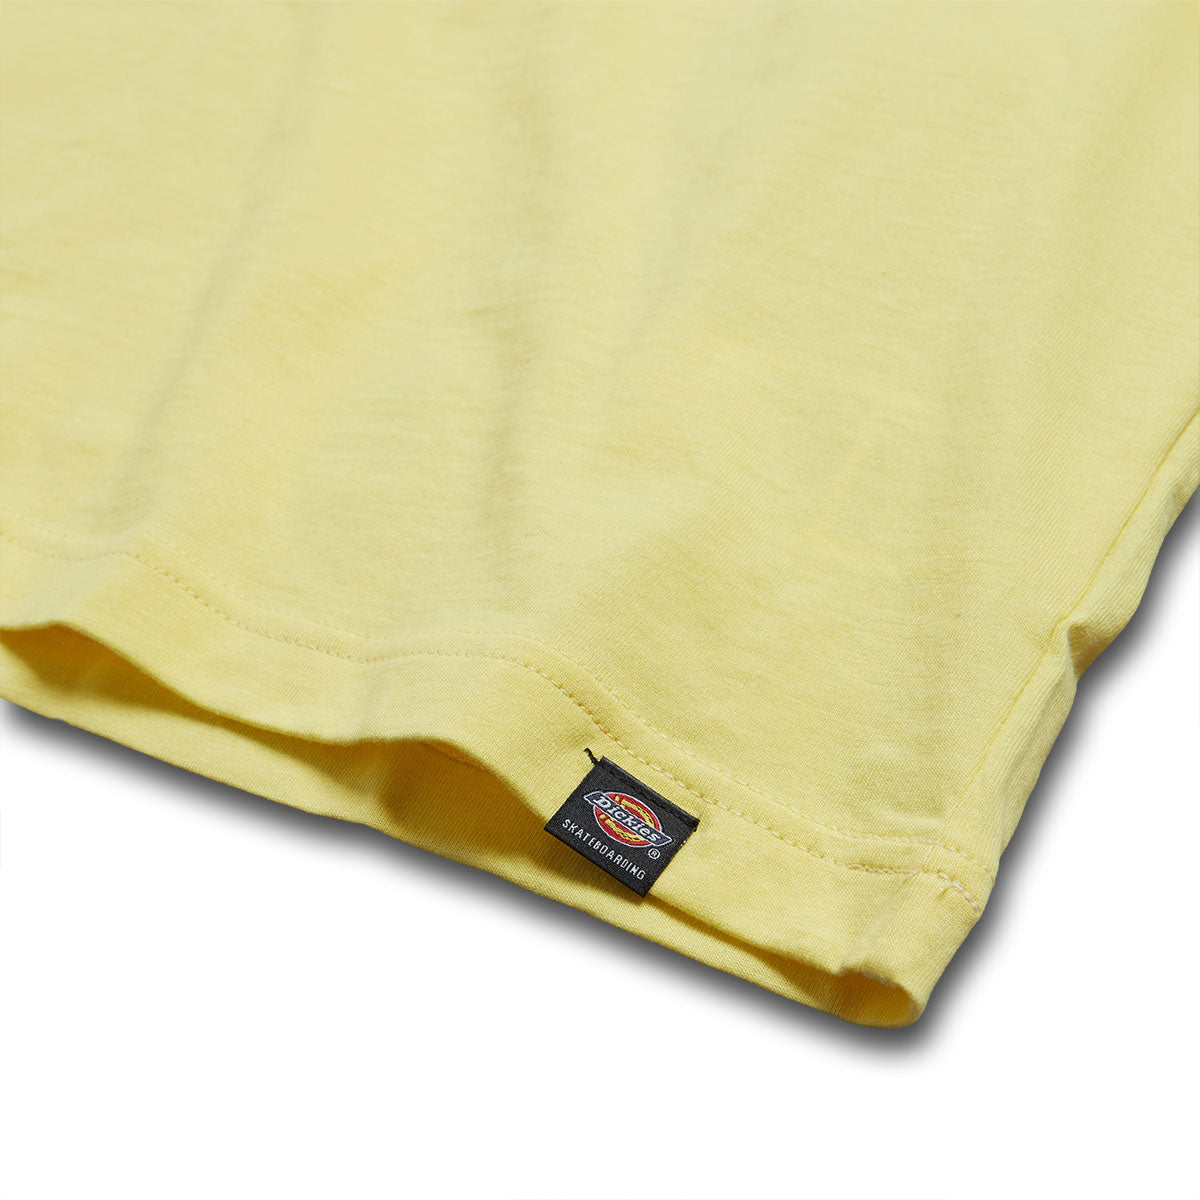 Dickies Guy Mariano Embroidered T-Shirt - Yellow Cream image 3